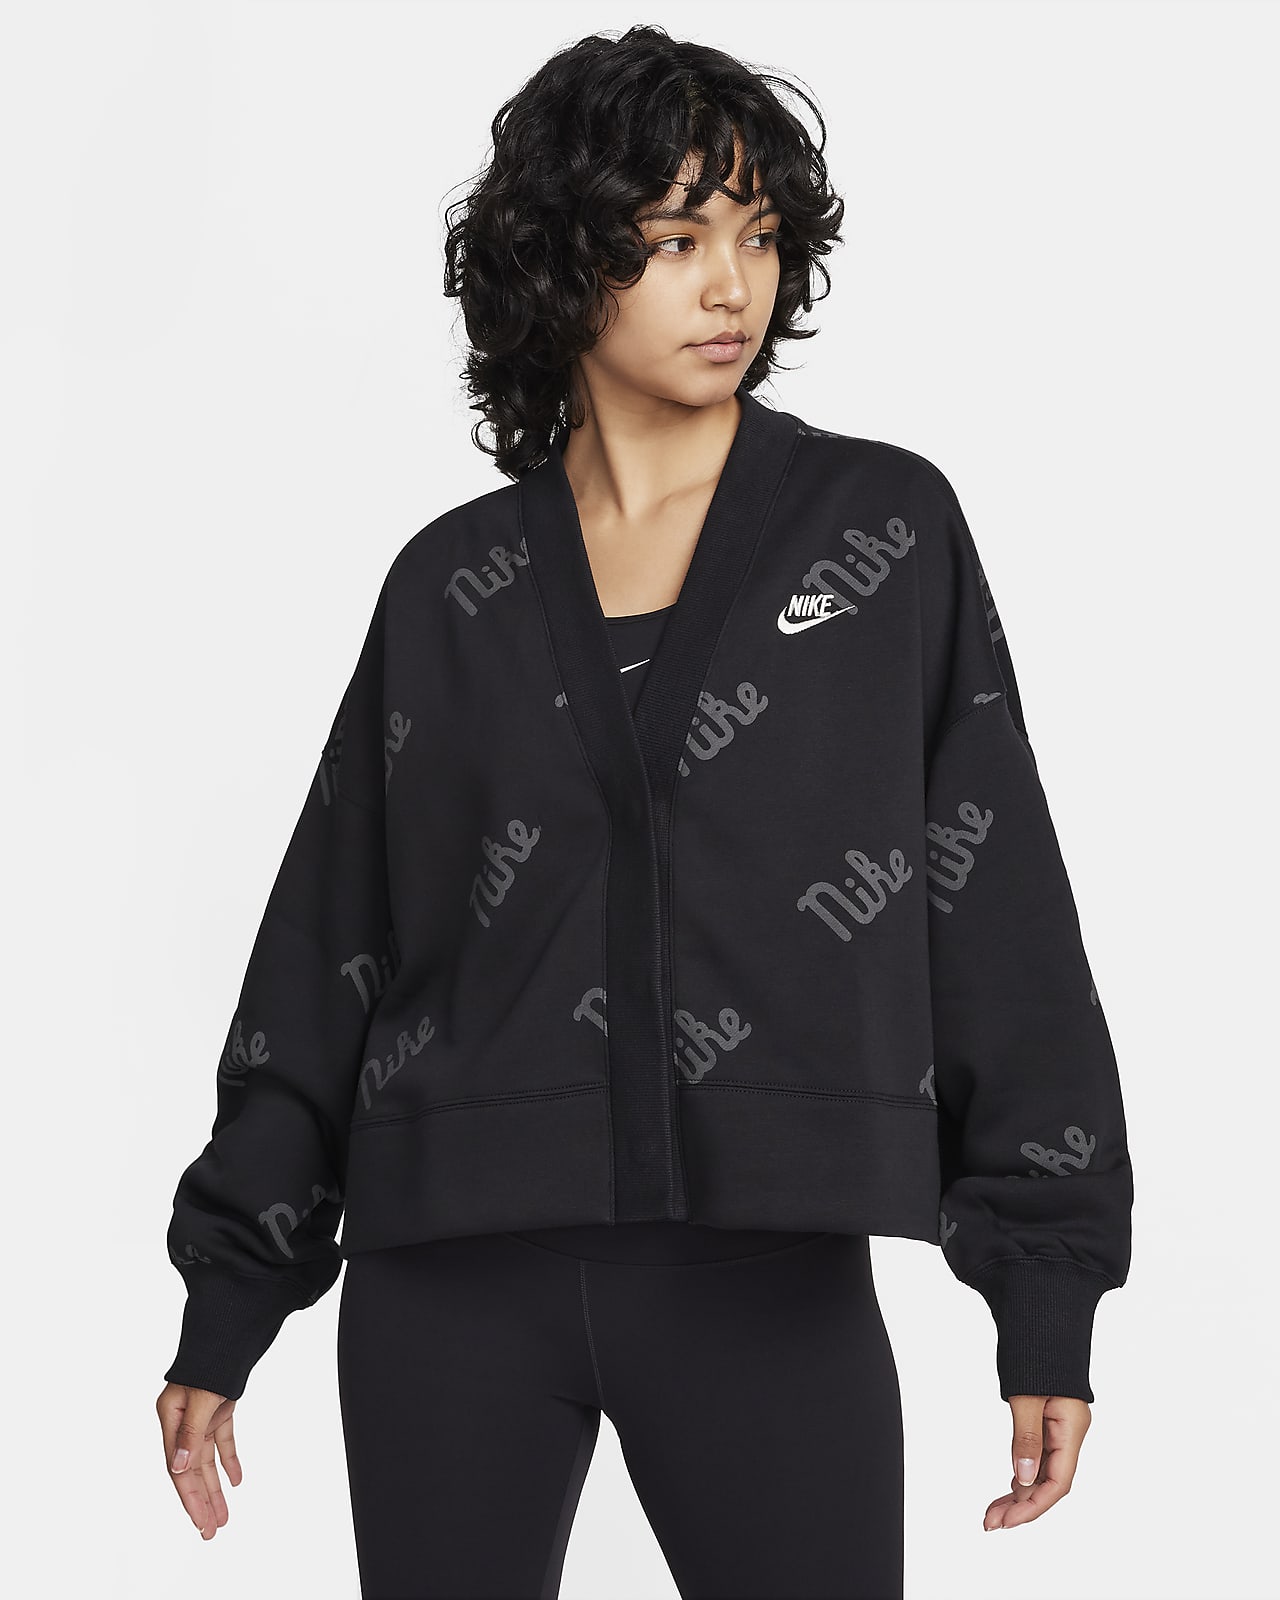 Cardigan extraoversized para mujer Nike Sportswear Phoenix Fleece